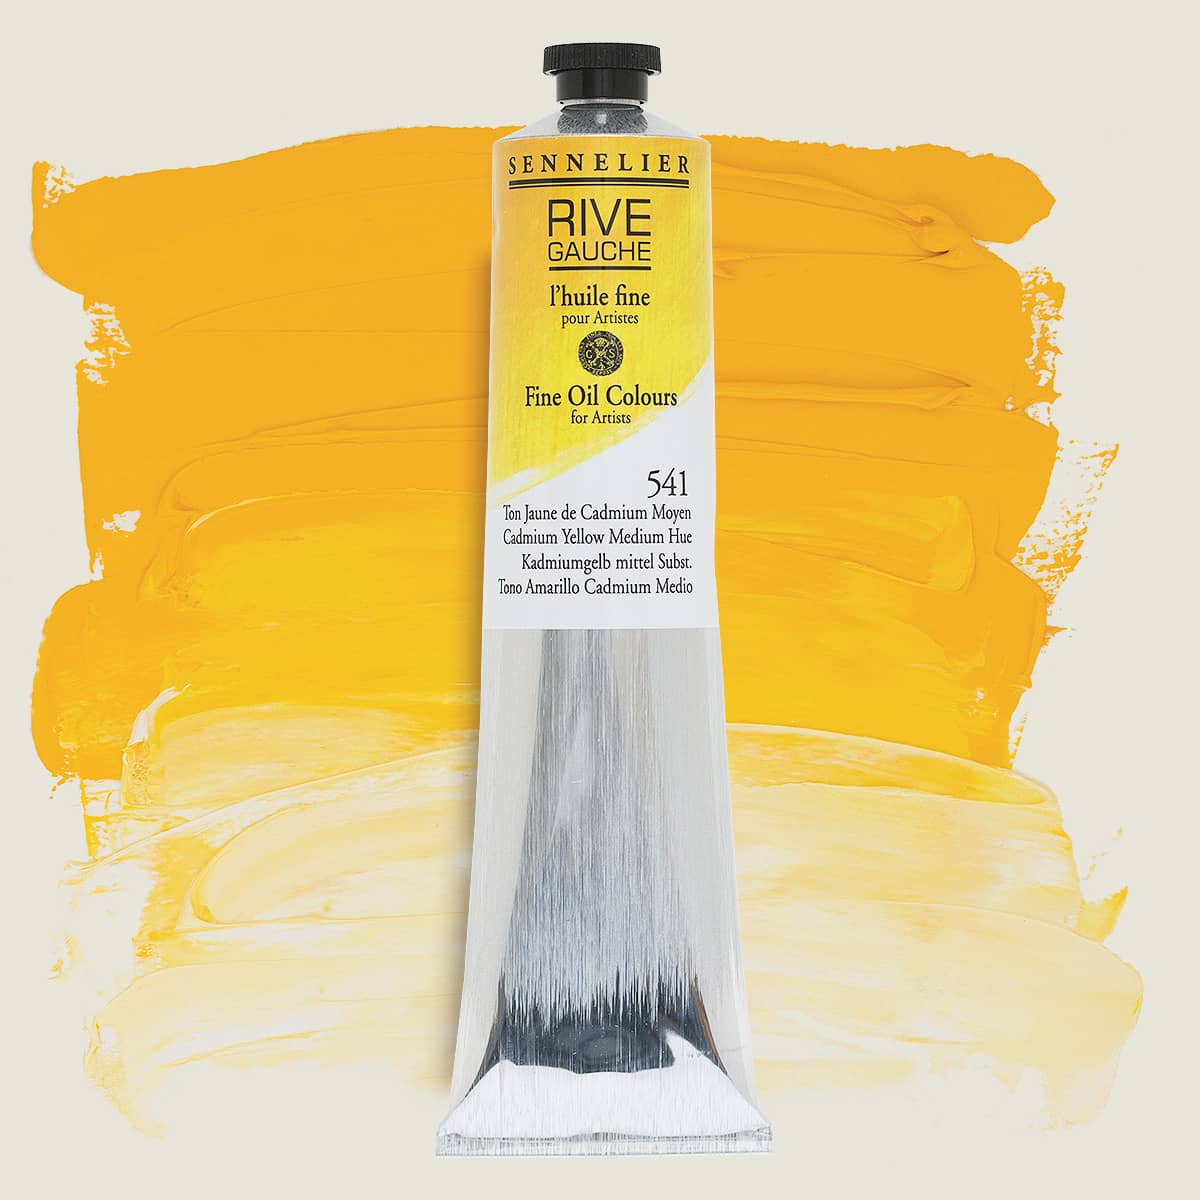 Da Vinci Cadmium Yellow Medium Artist Oil Paint - 150mL